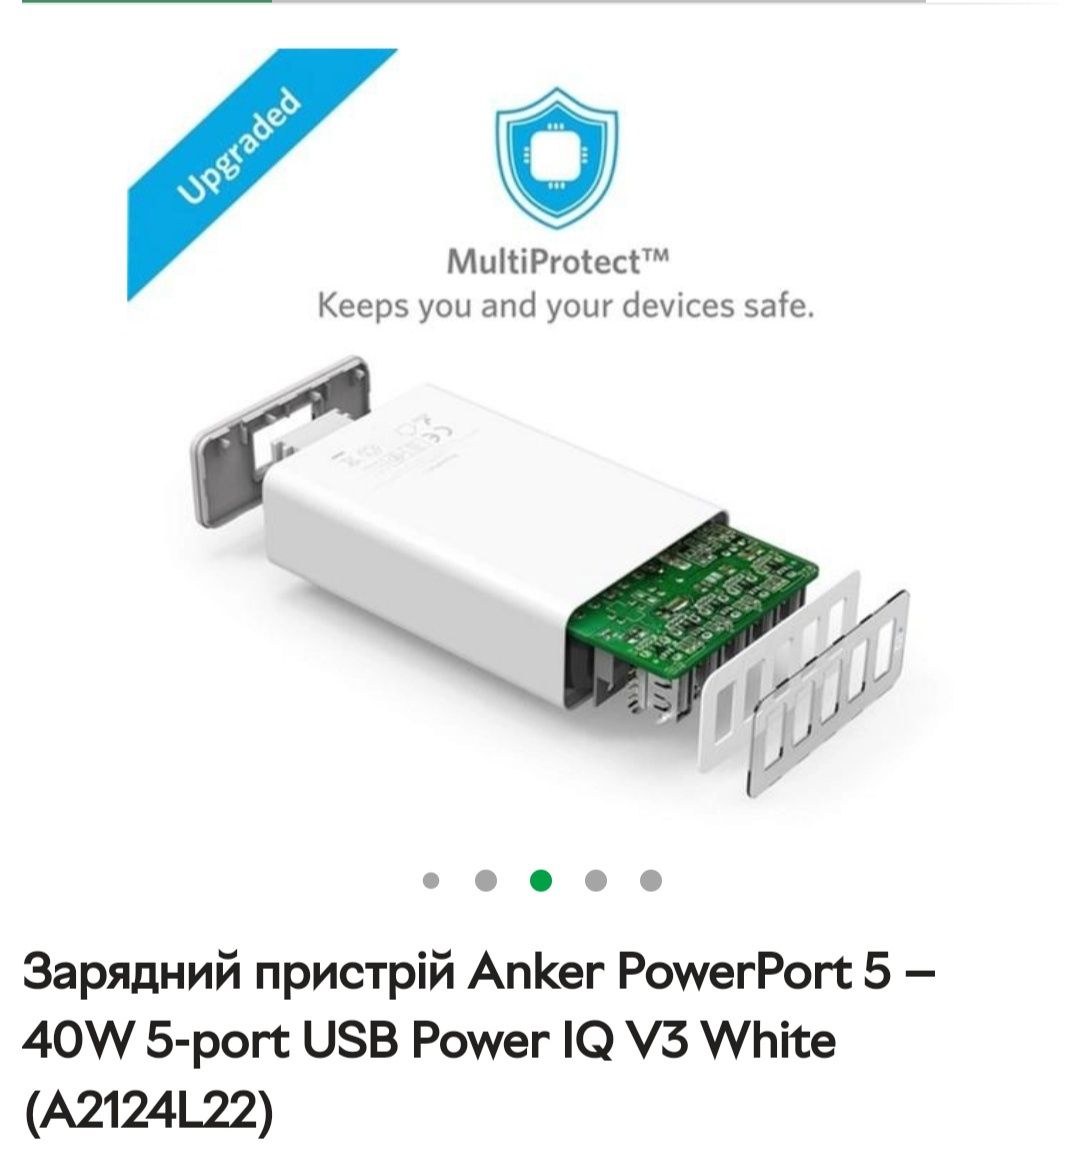 anker powerport 5 port 40w 5-port usb charger